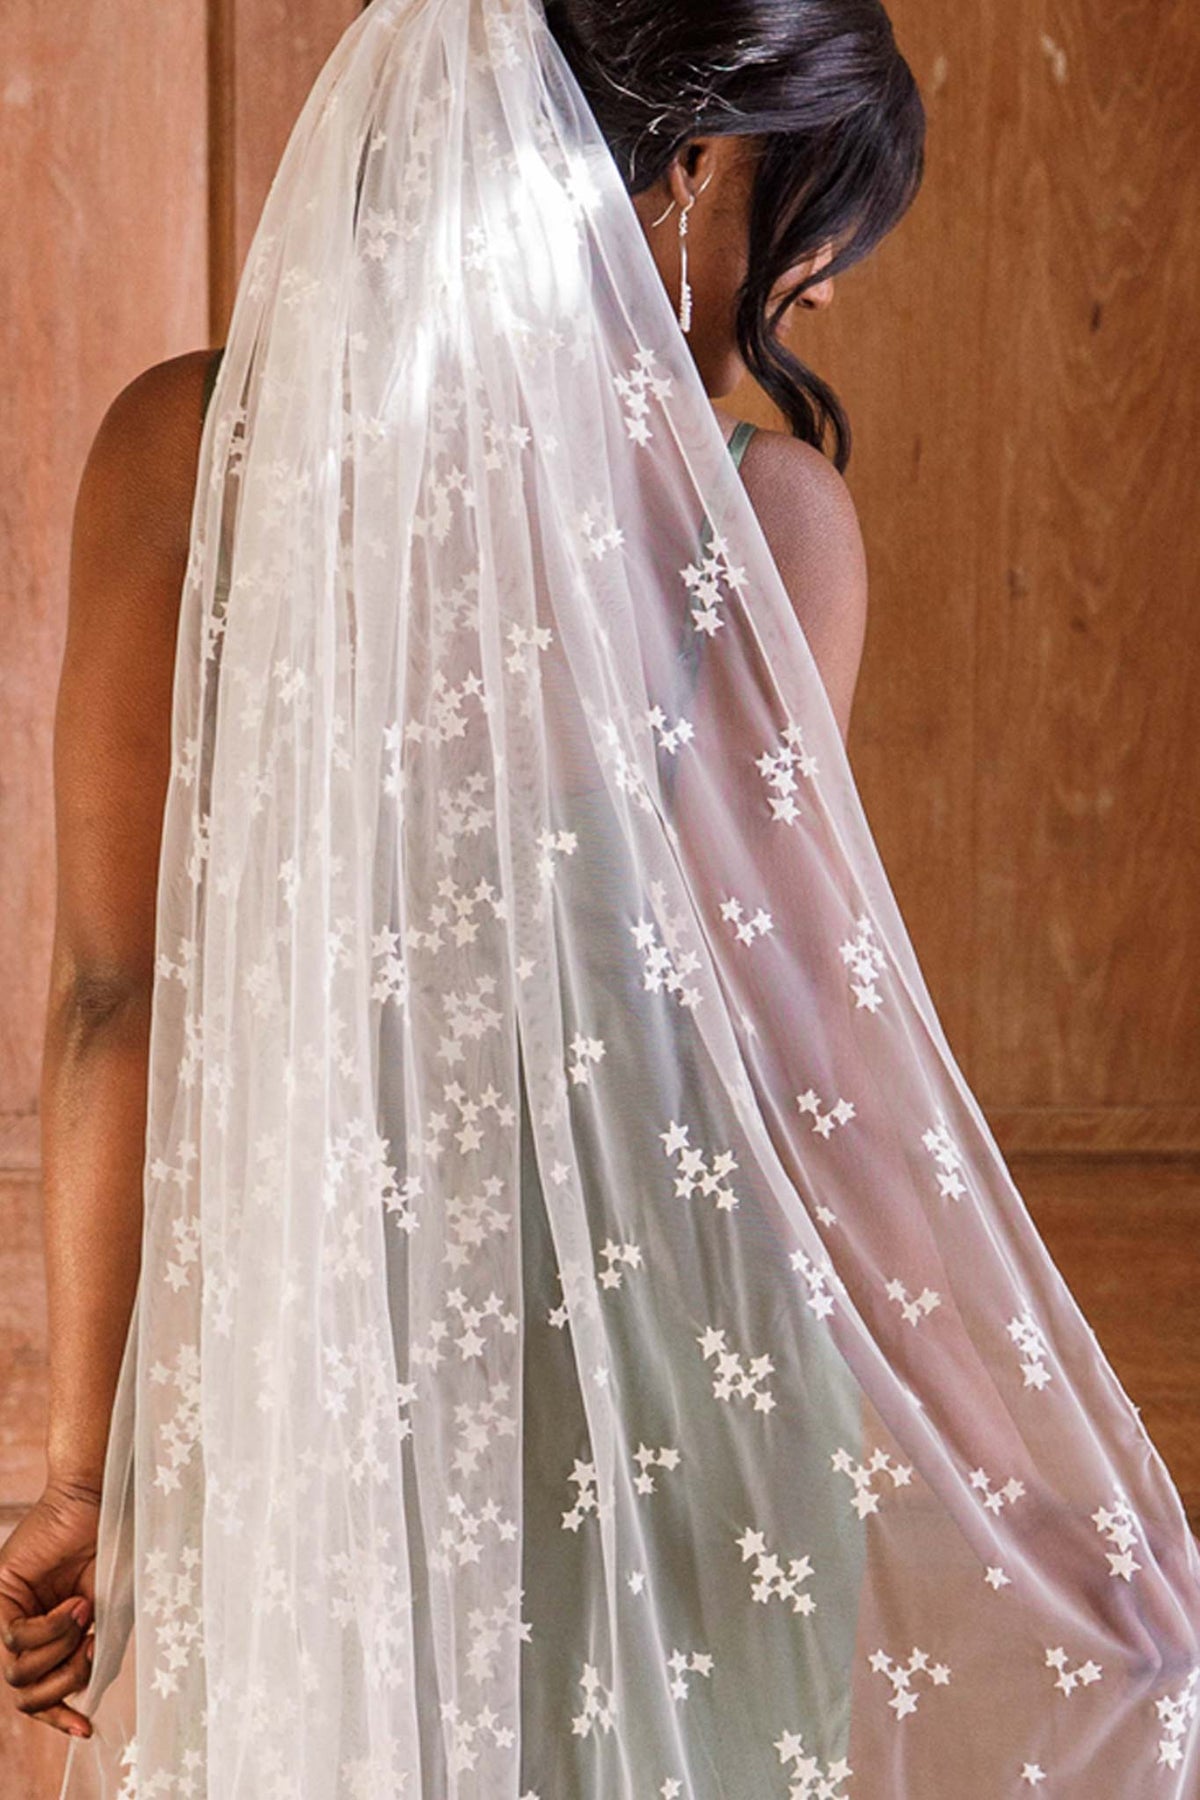 Star Wedding Veil